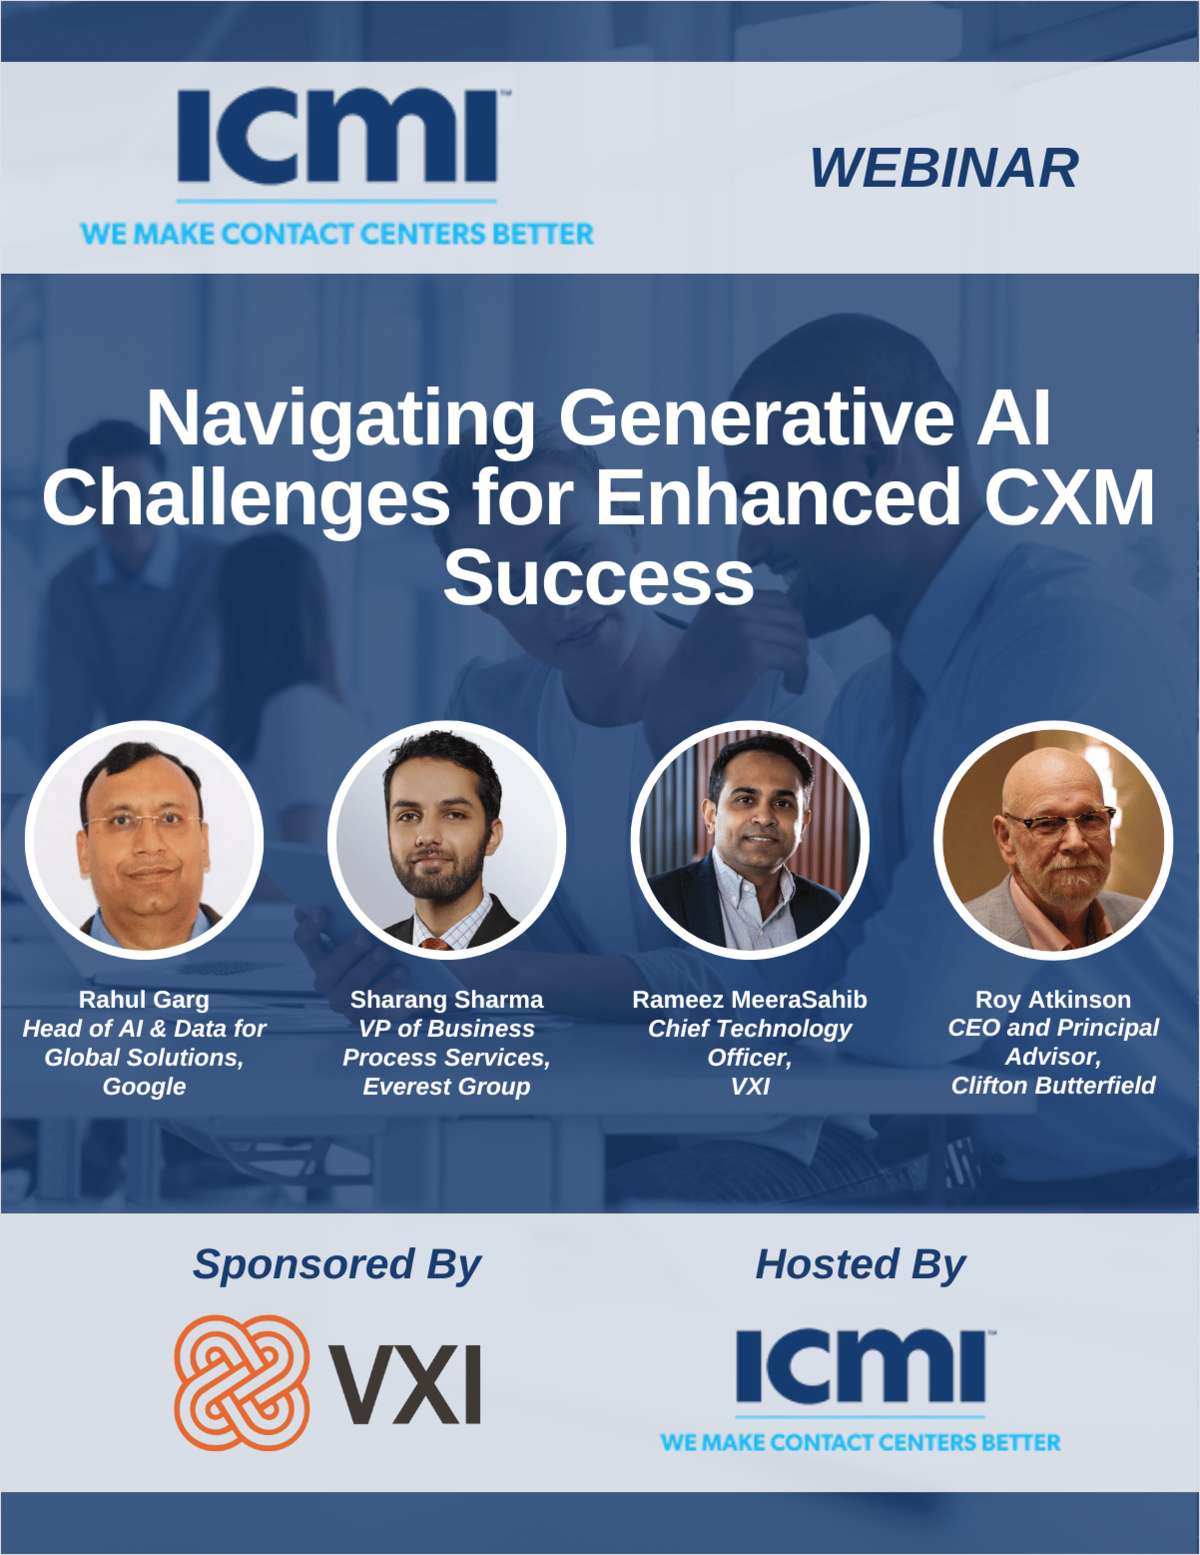 Navigating Generative AI Challenges for Enhanced CXM Success